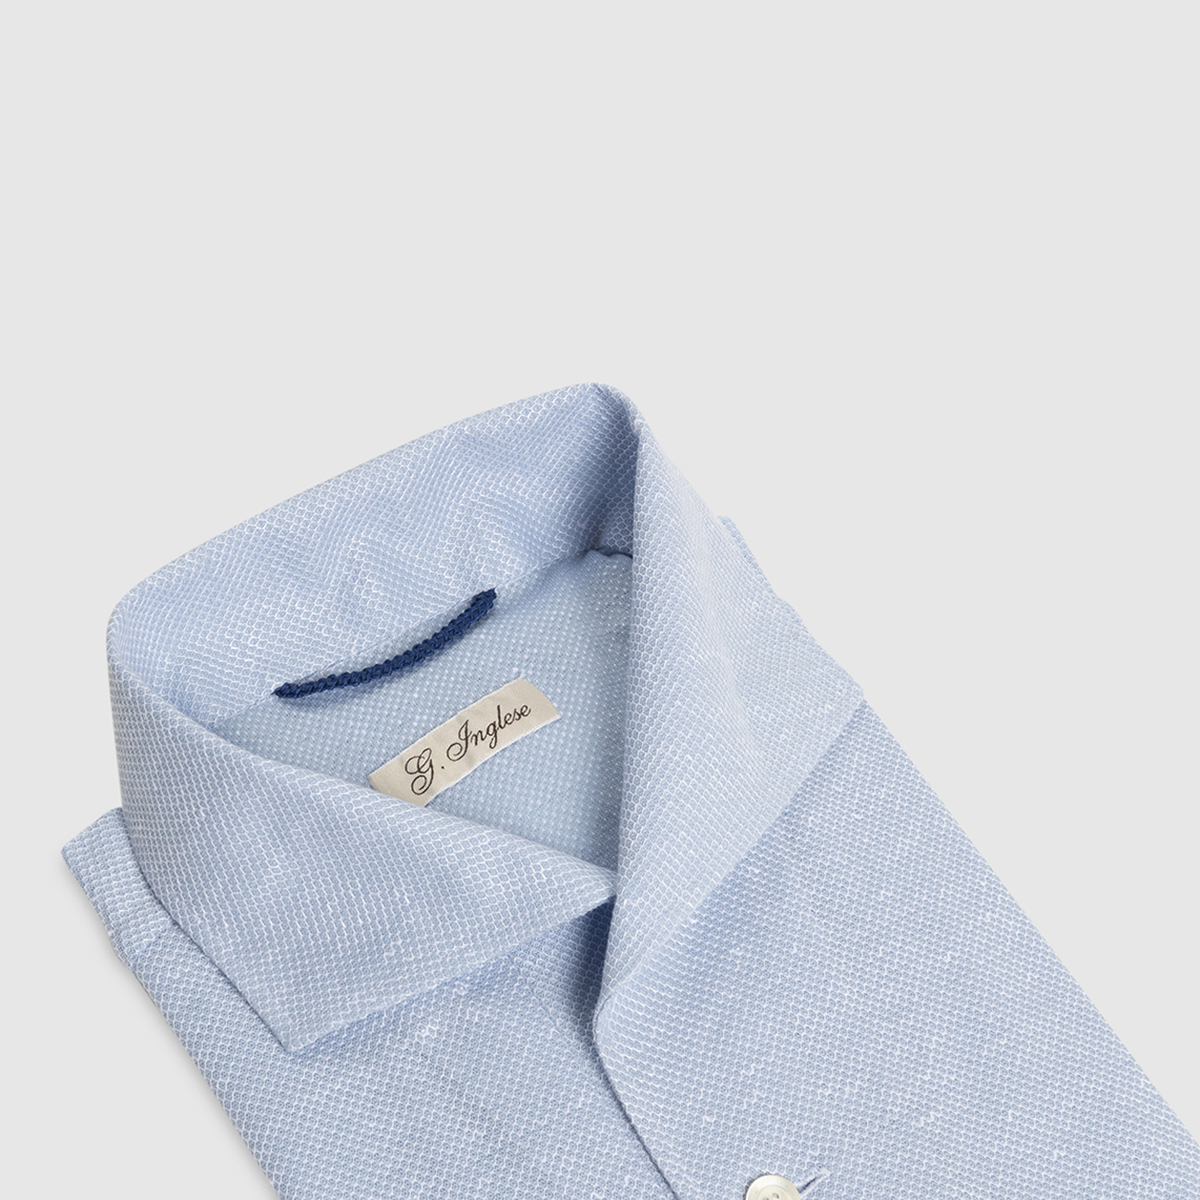 Miami Polo Shirt in Light Blue Cotton-Linen Piquet G. Inglese on sale 2022 2